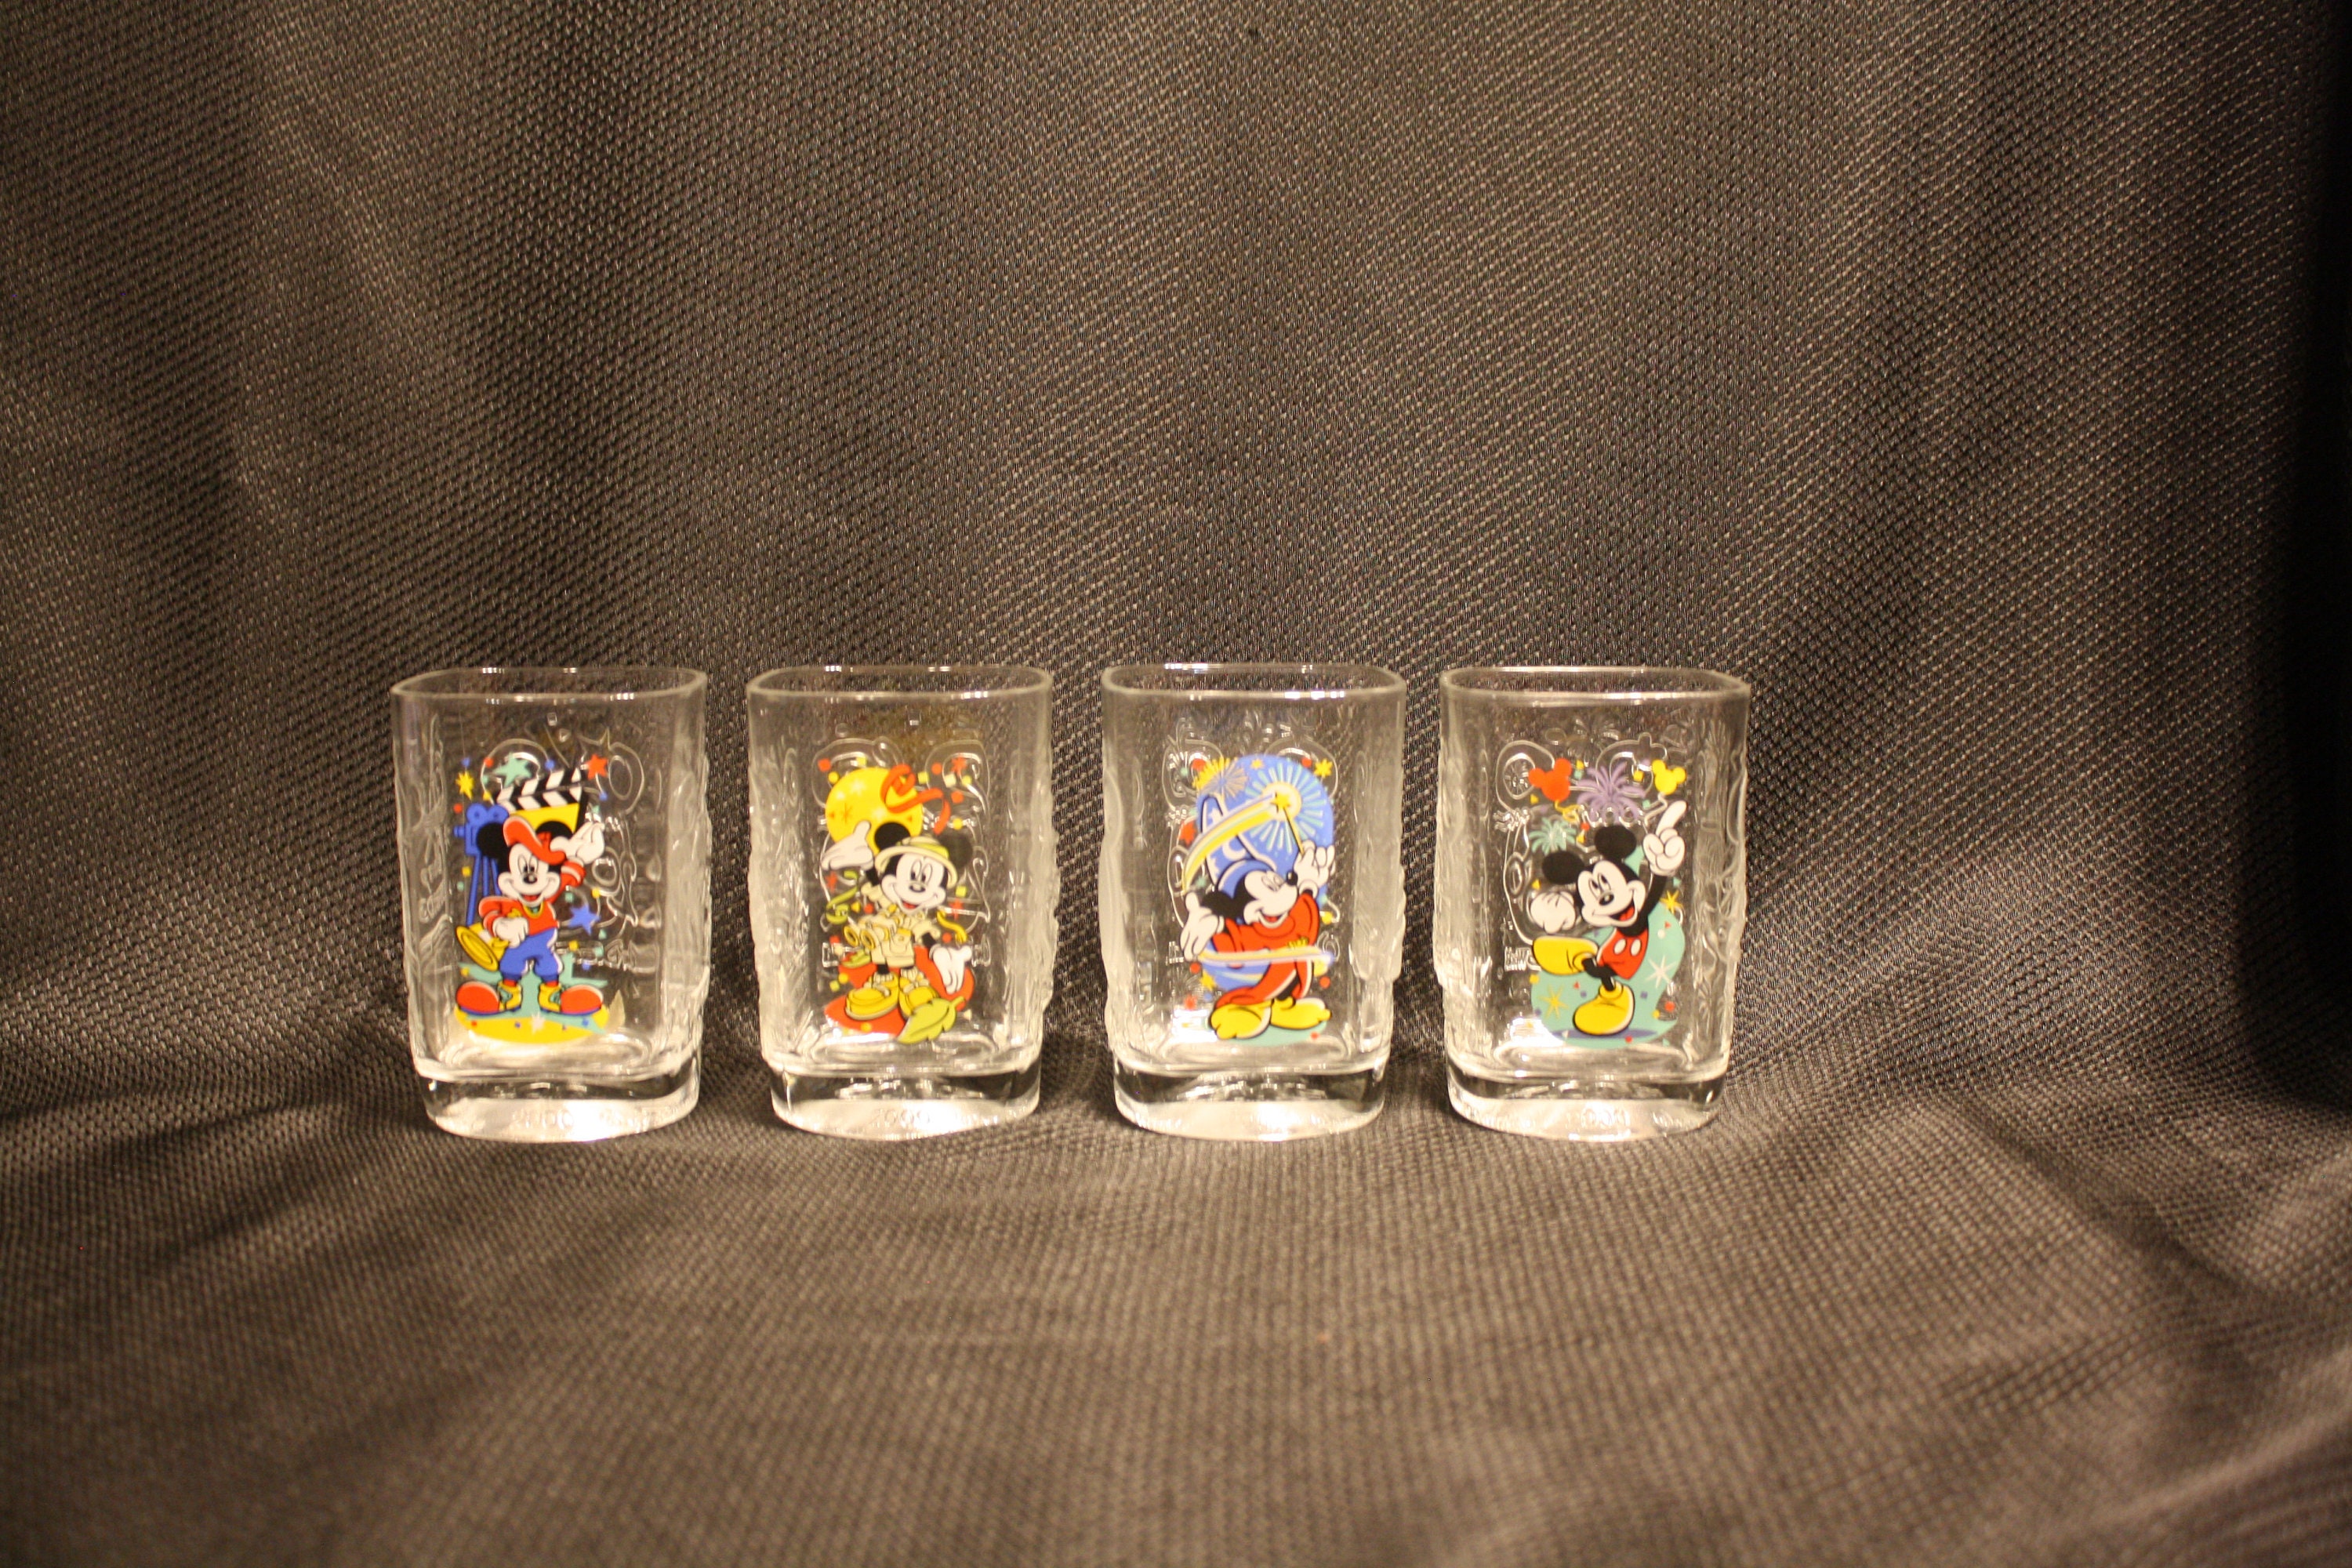 BRAND NEW 2000 INDIVIDUAL Walt Disney McDonald's Mickey Mouse Glasses